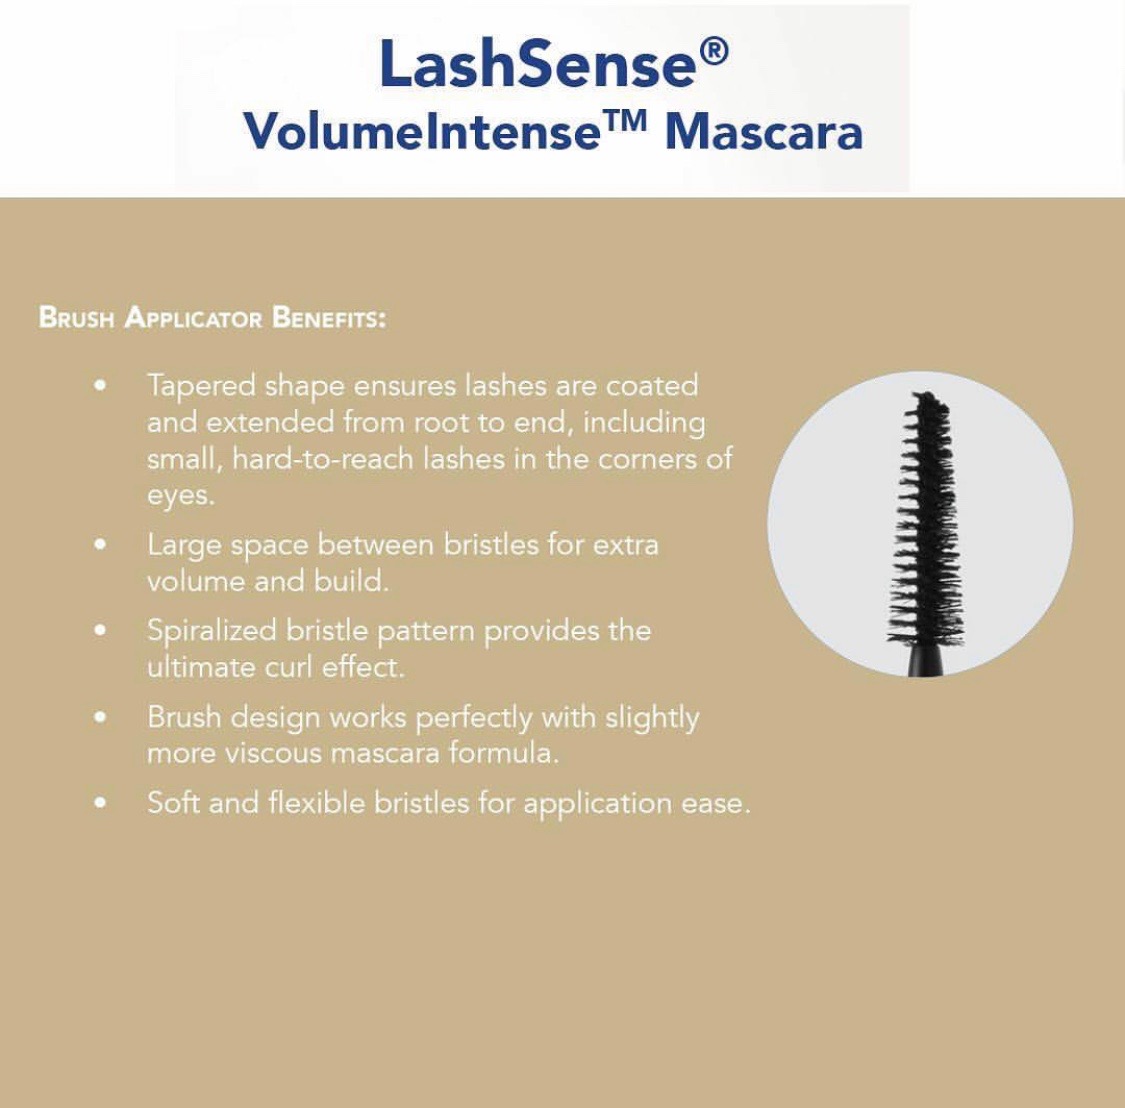 LashSense Mascara VolumeIntense Info